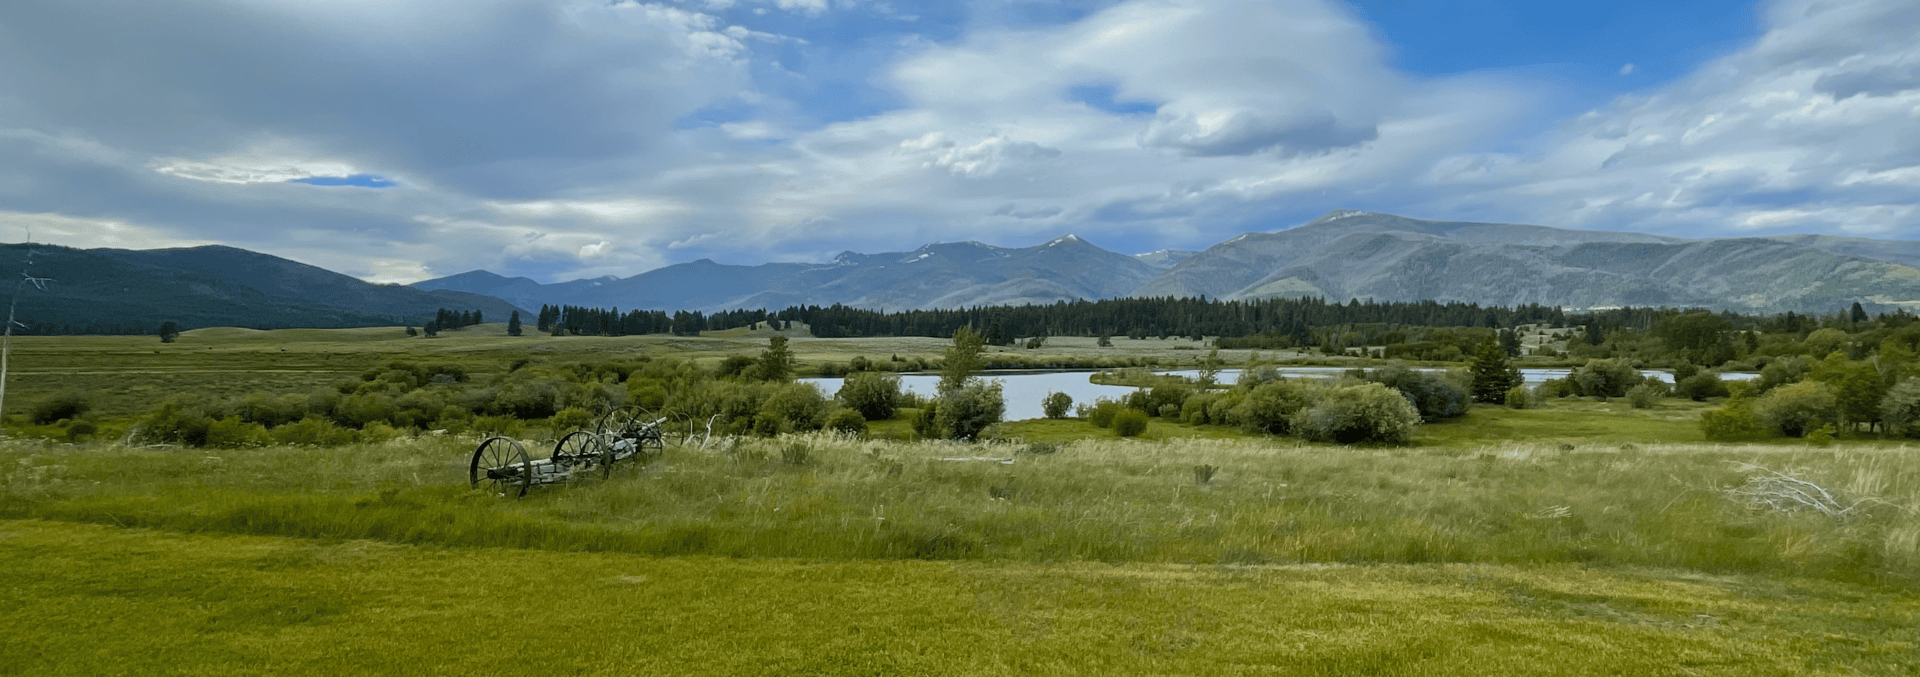 montana property for sale keep cool creek at smith lake